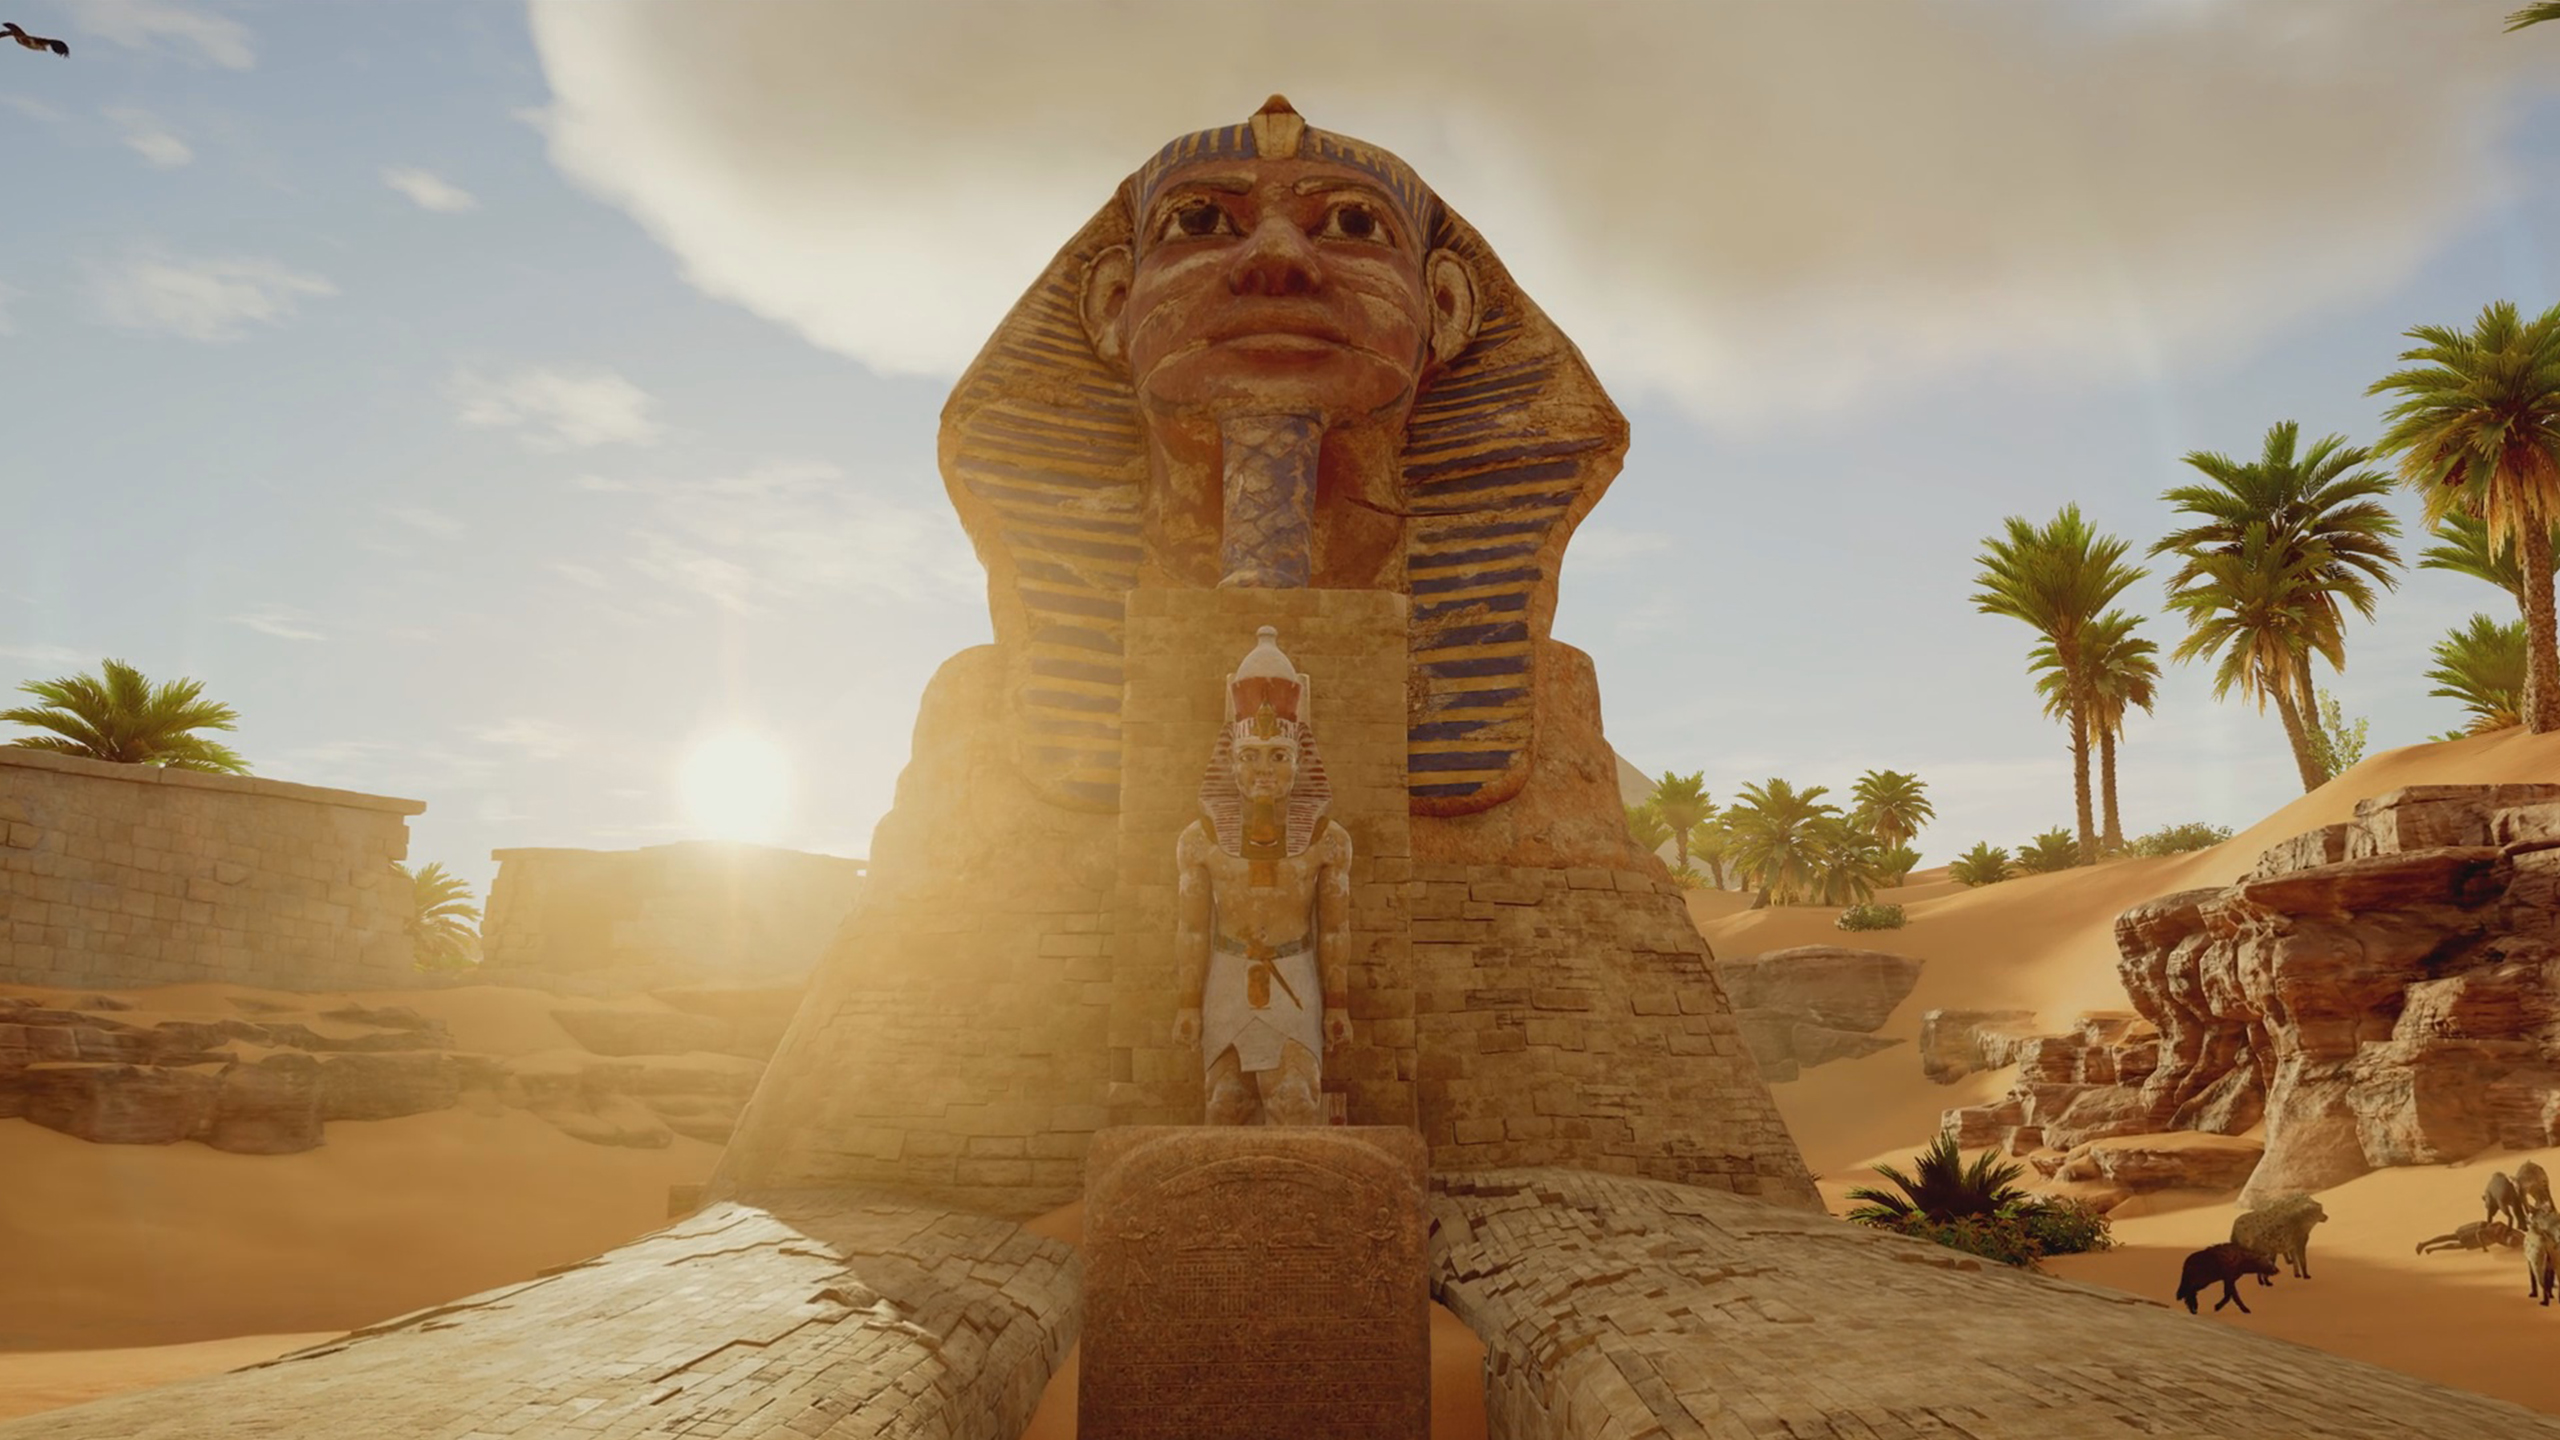 assassin's creed origins, video game, desert, sphinx, statue, assassin's creed wallpaper for mobile